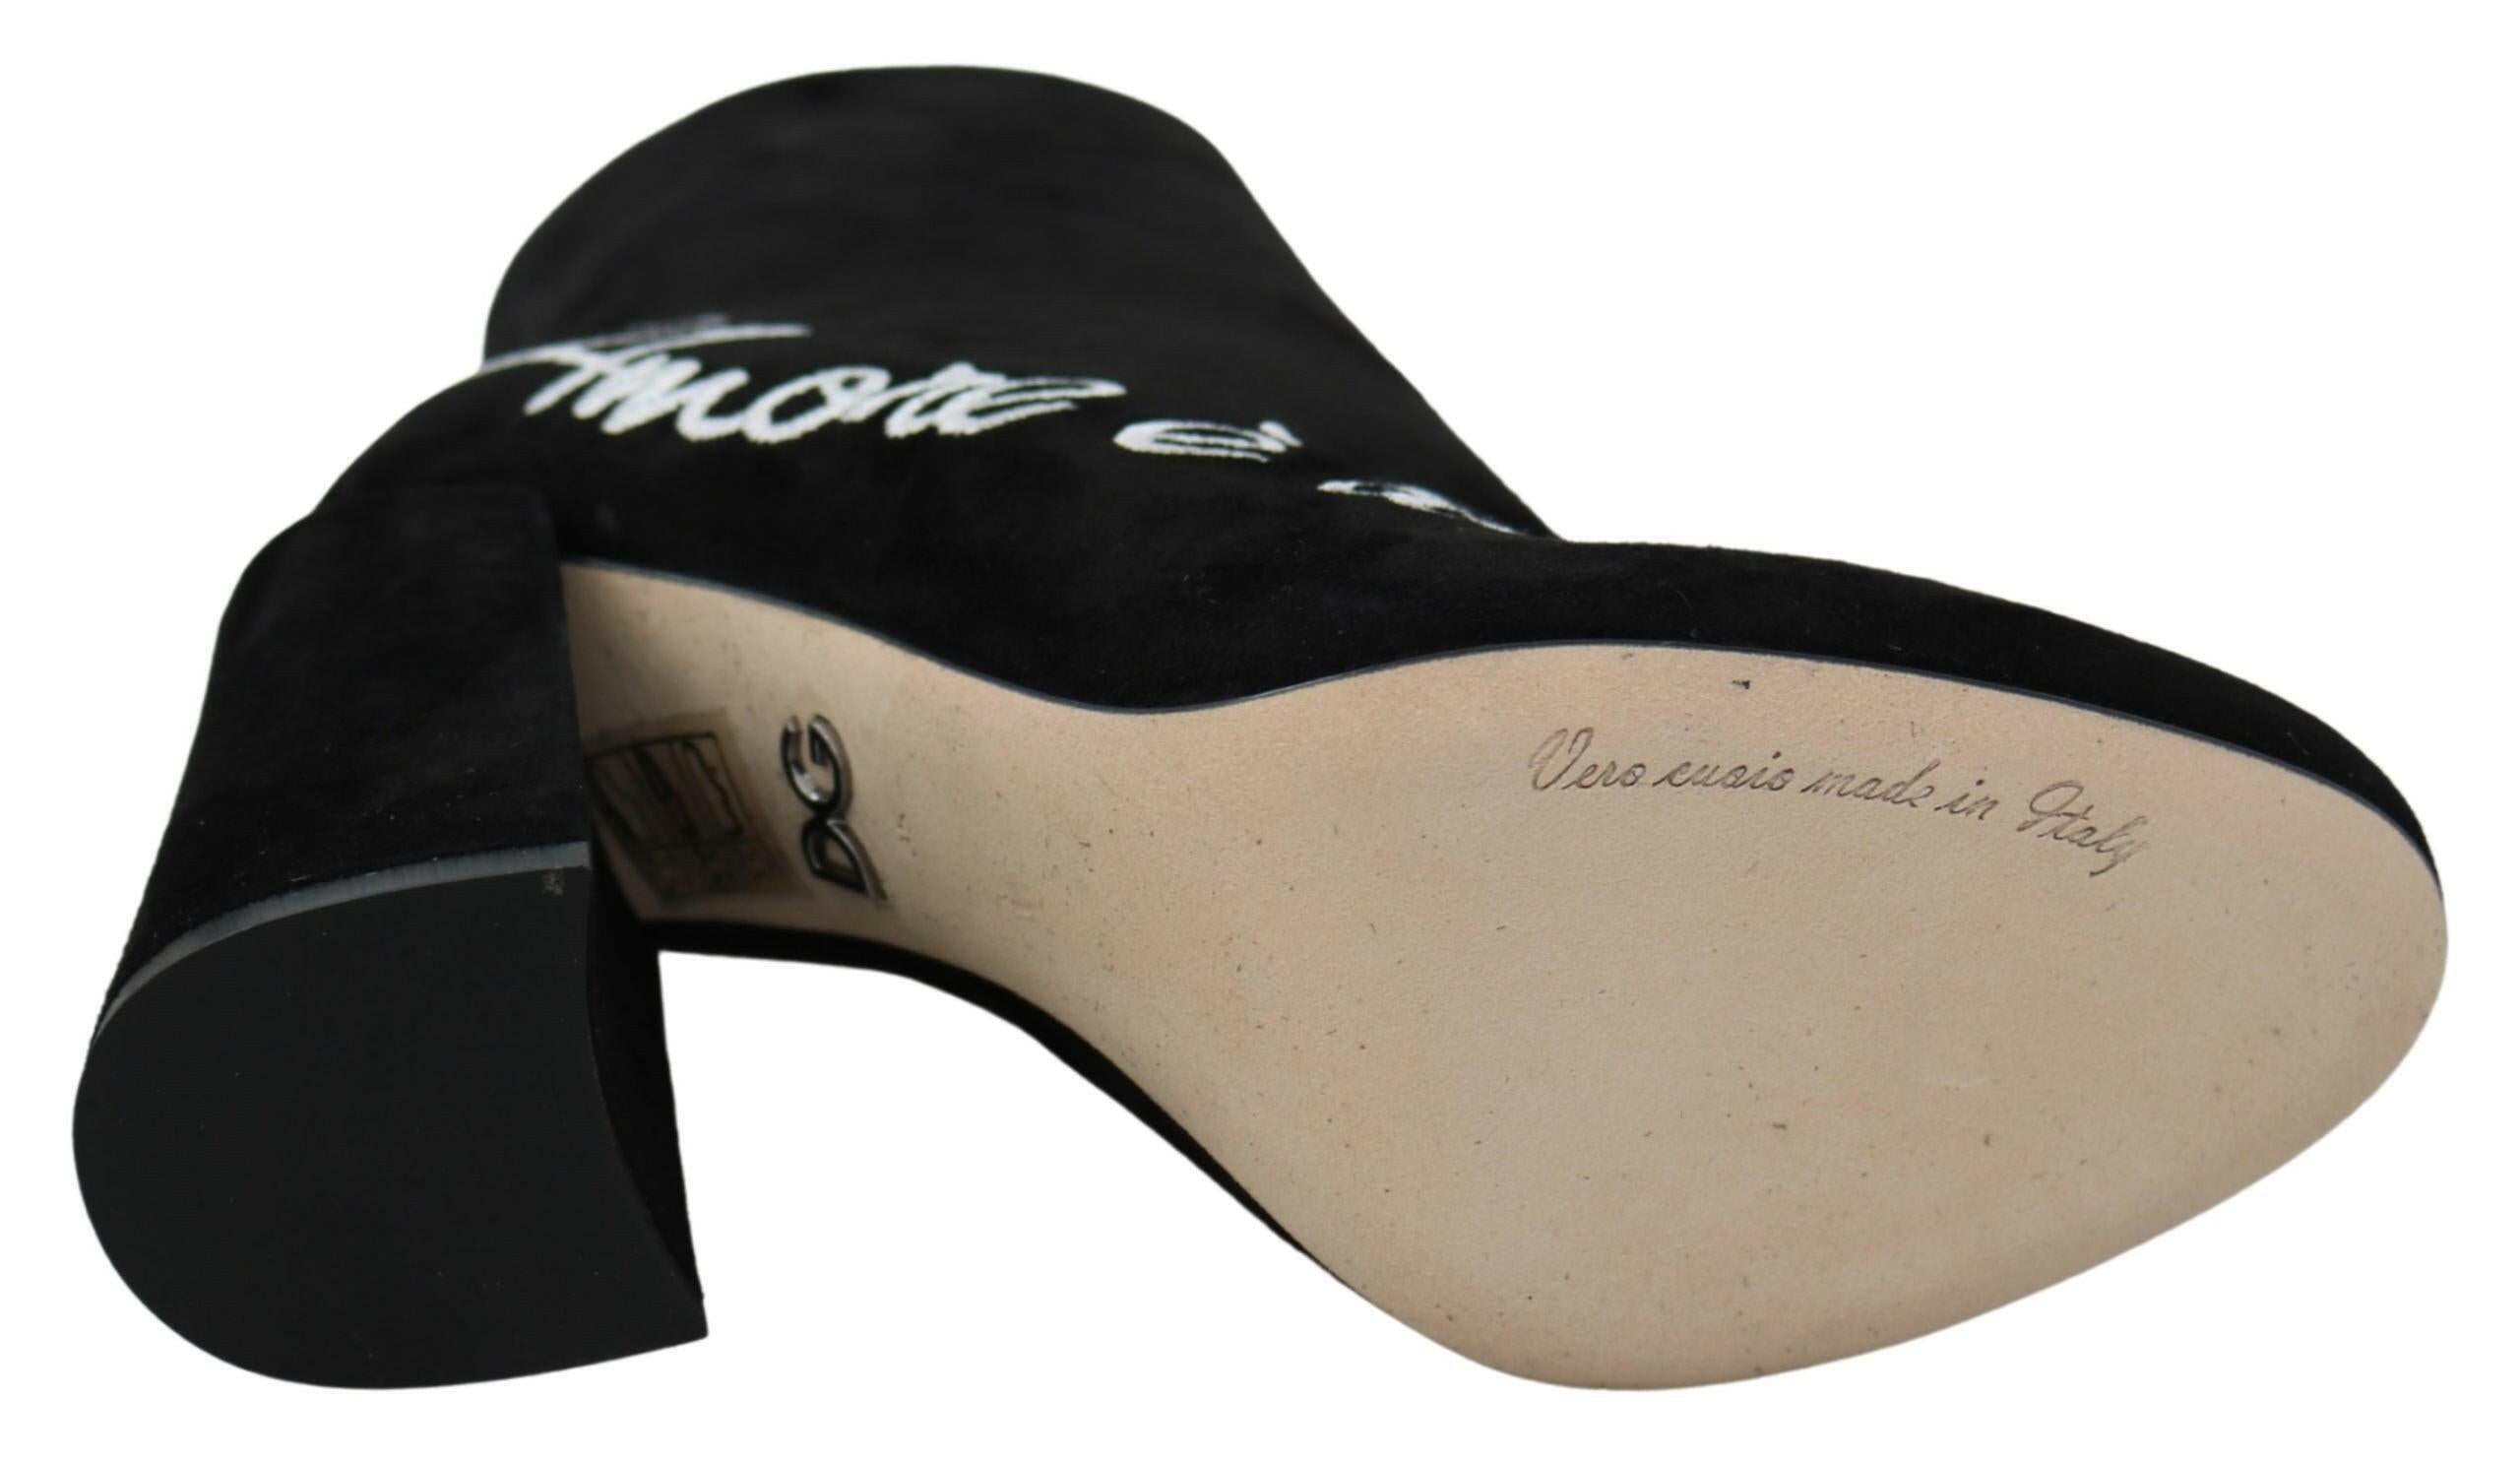 Dolce & Gabbana Black Suede L'Amore E'Bellezza Boots Shoes - GENUINE AUTHENTIC BRAND LLC  